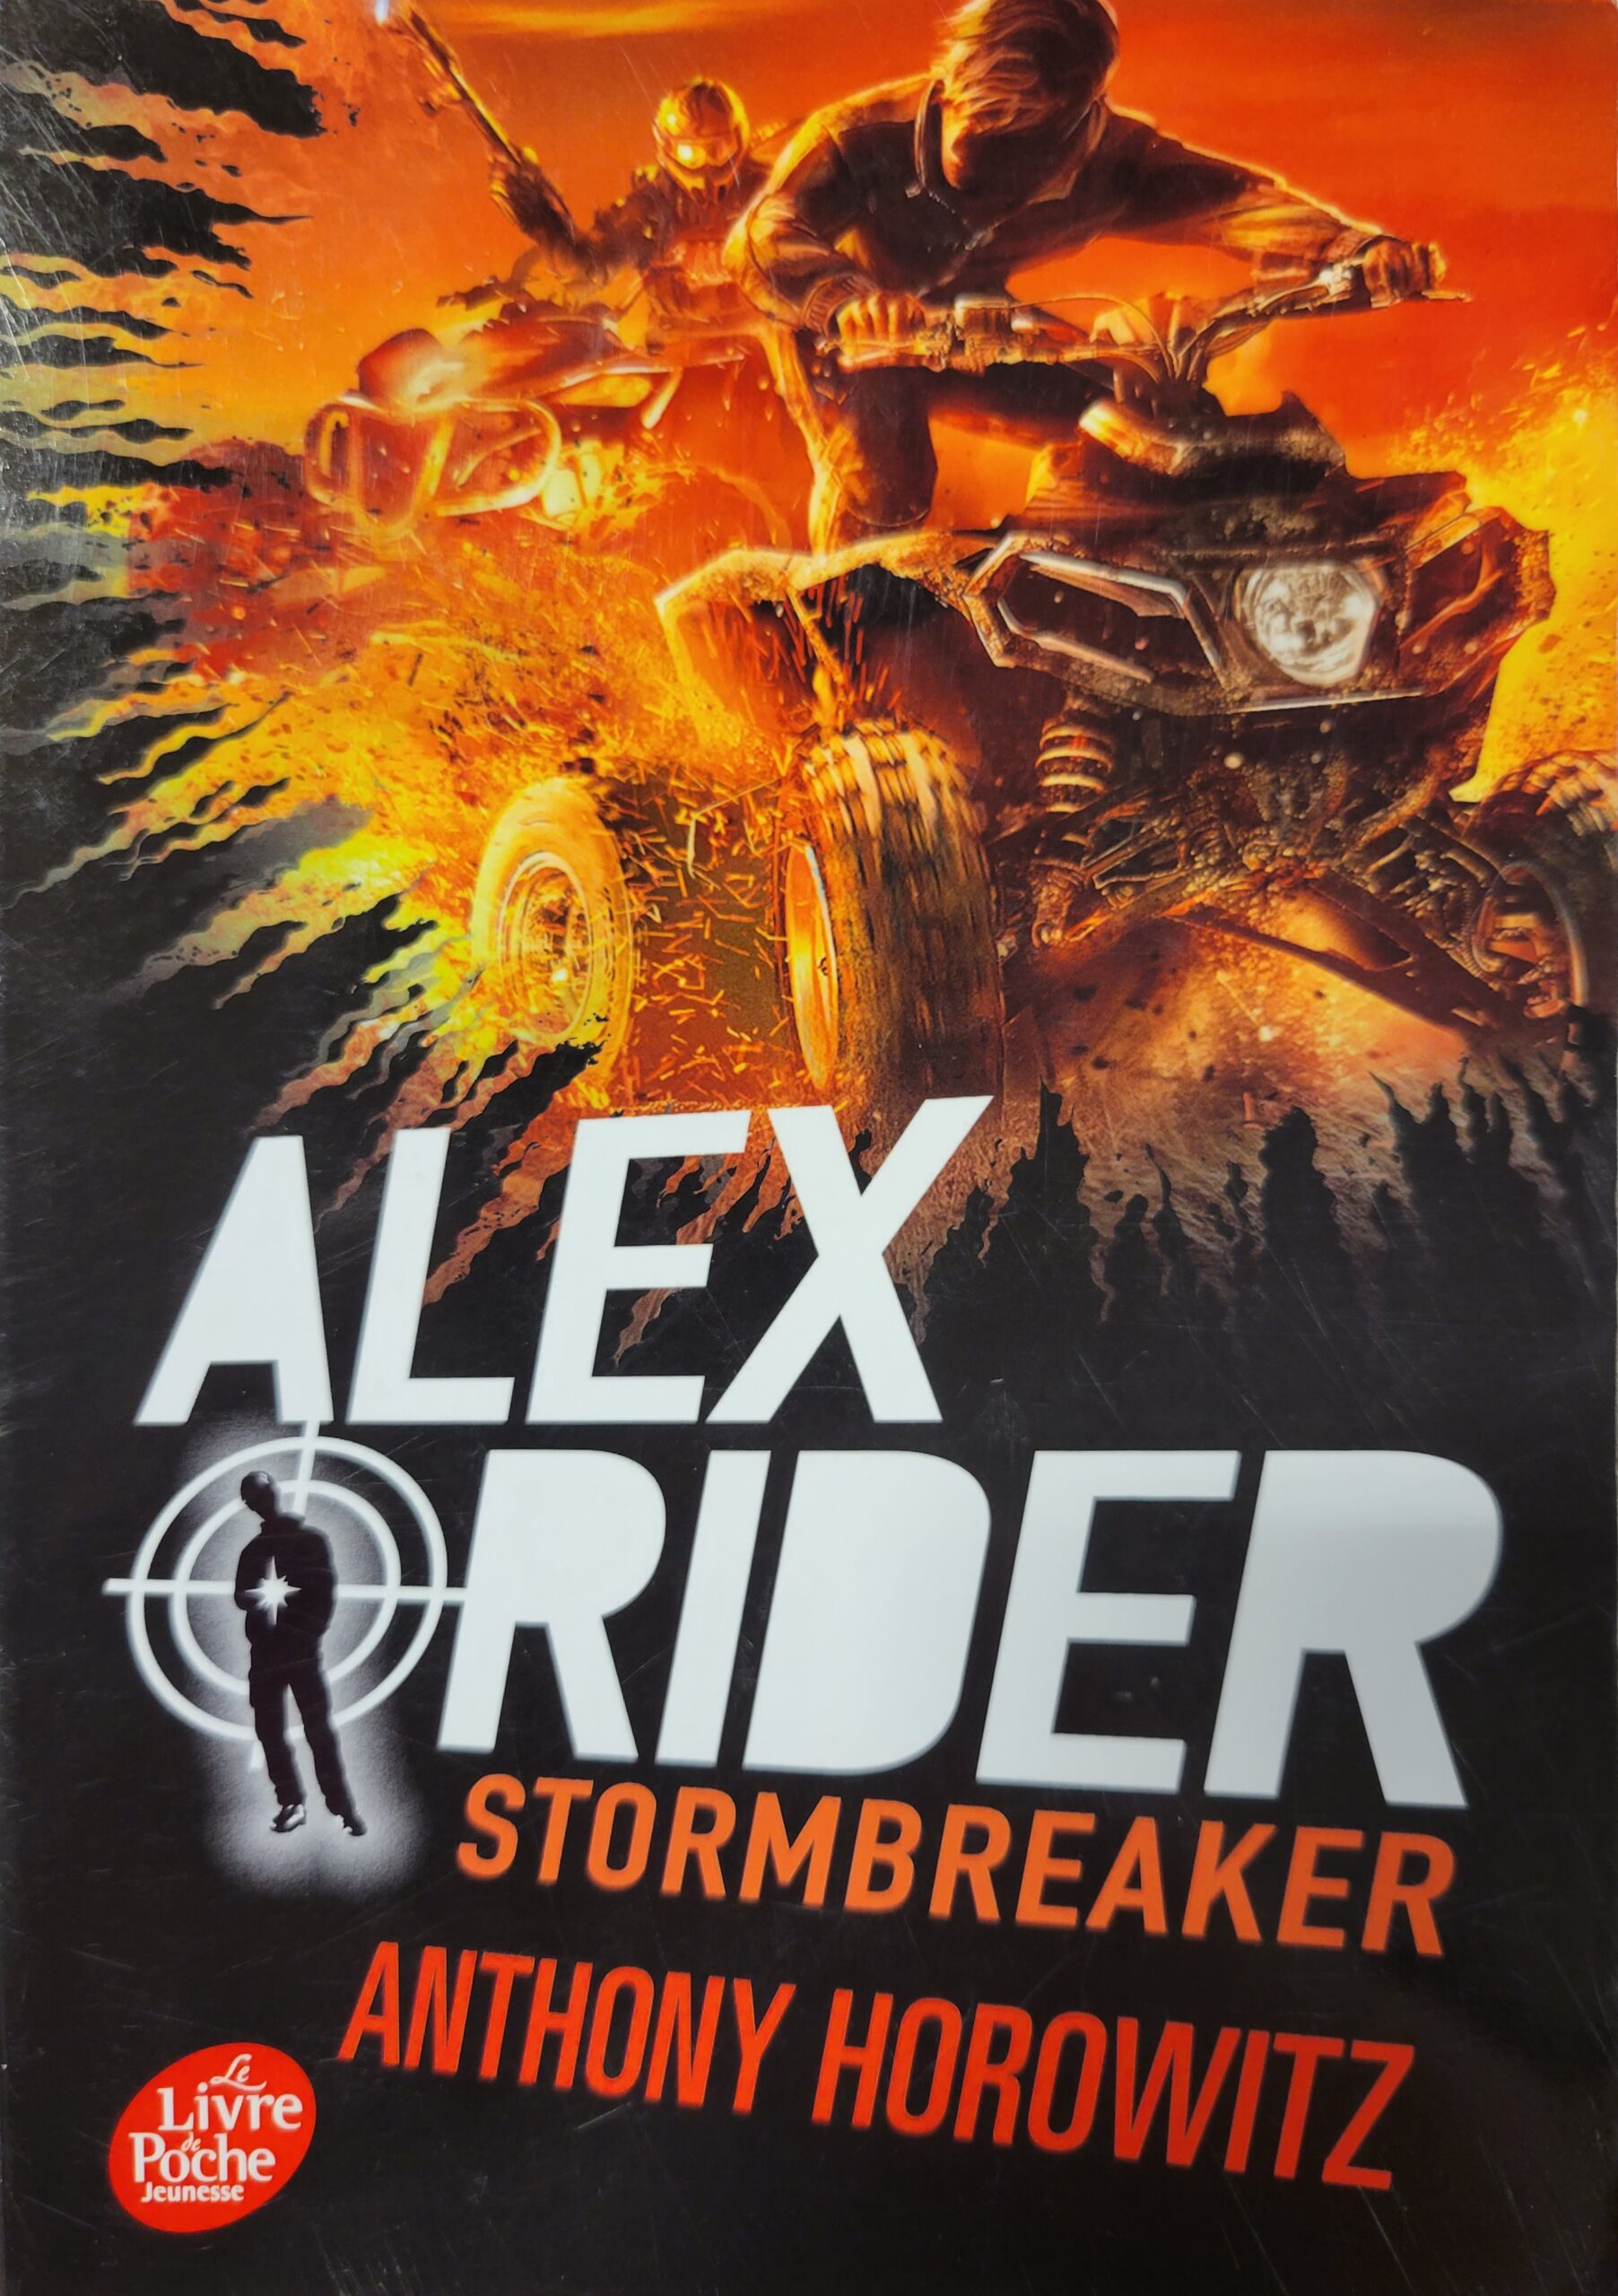 Alex Rider Tome 1 : Stormbreaker Anthony Horowitz